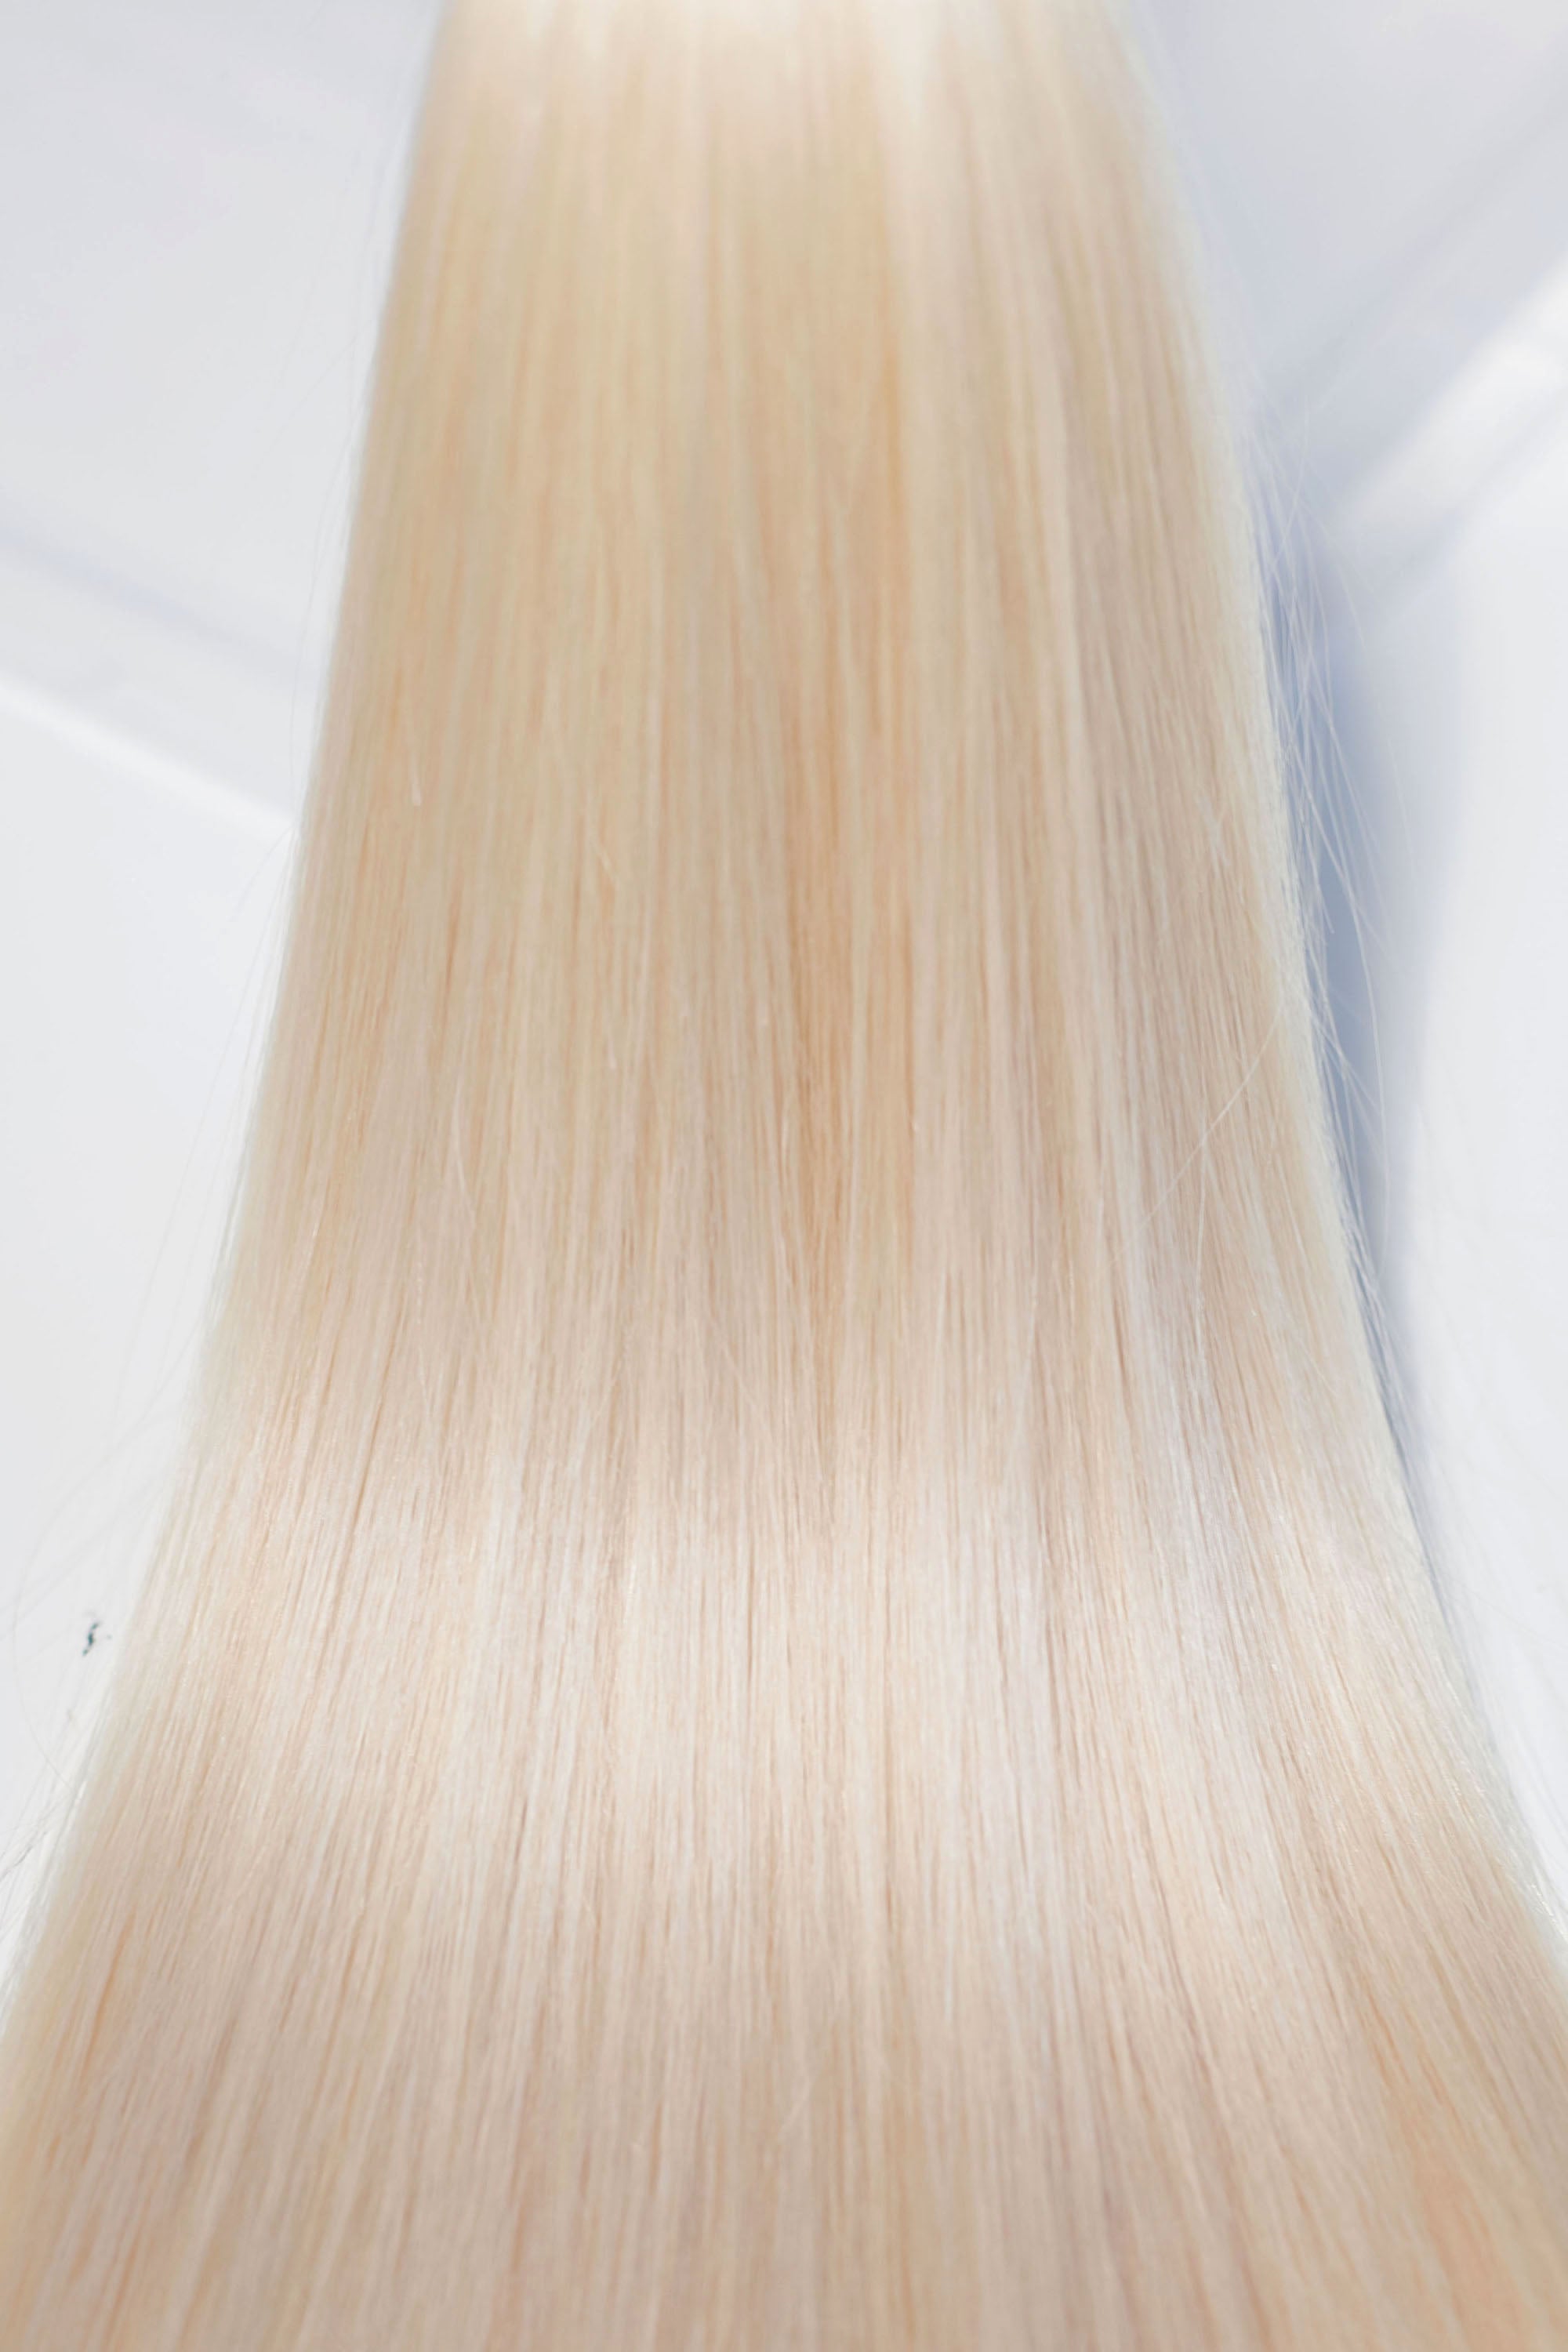 Behair professional Keratin Tip "Premium" 24" (60cm) Natural Straight Ice Blond #000 - 25g (1g each pcs) hair extensions